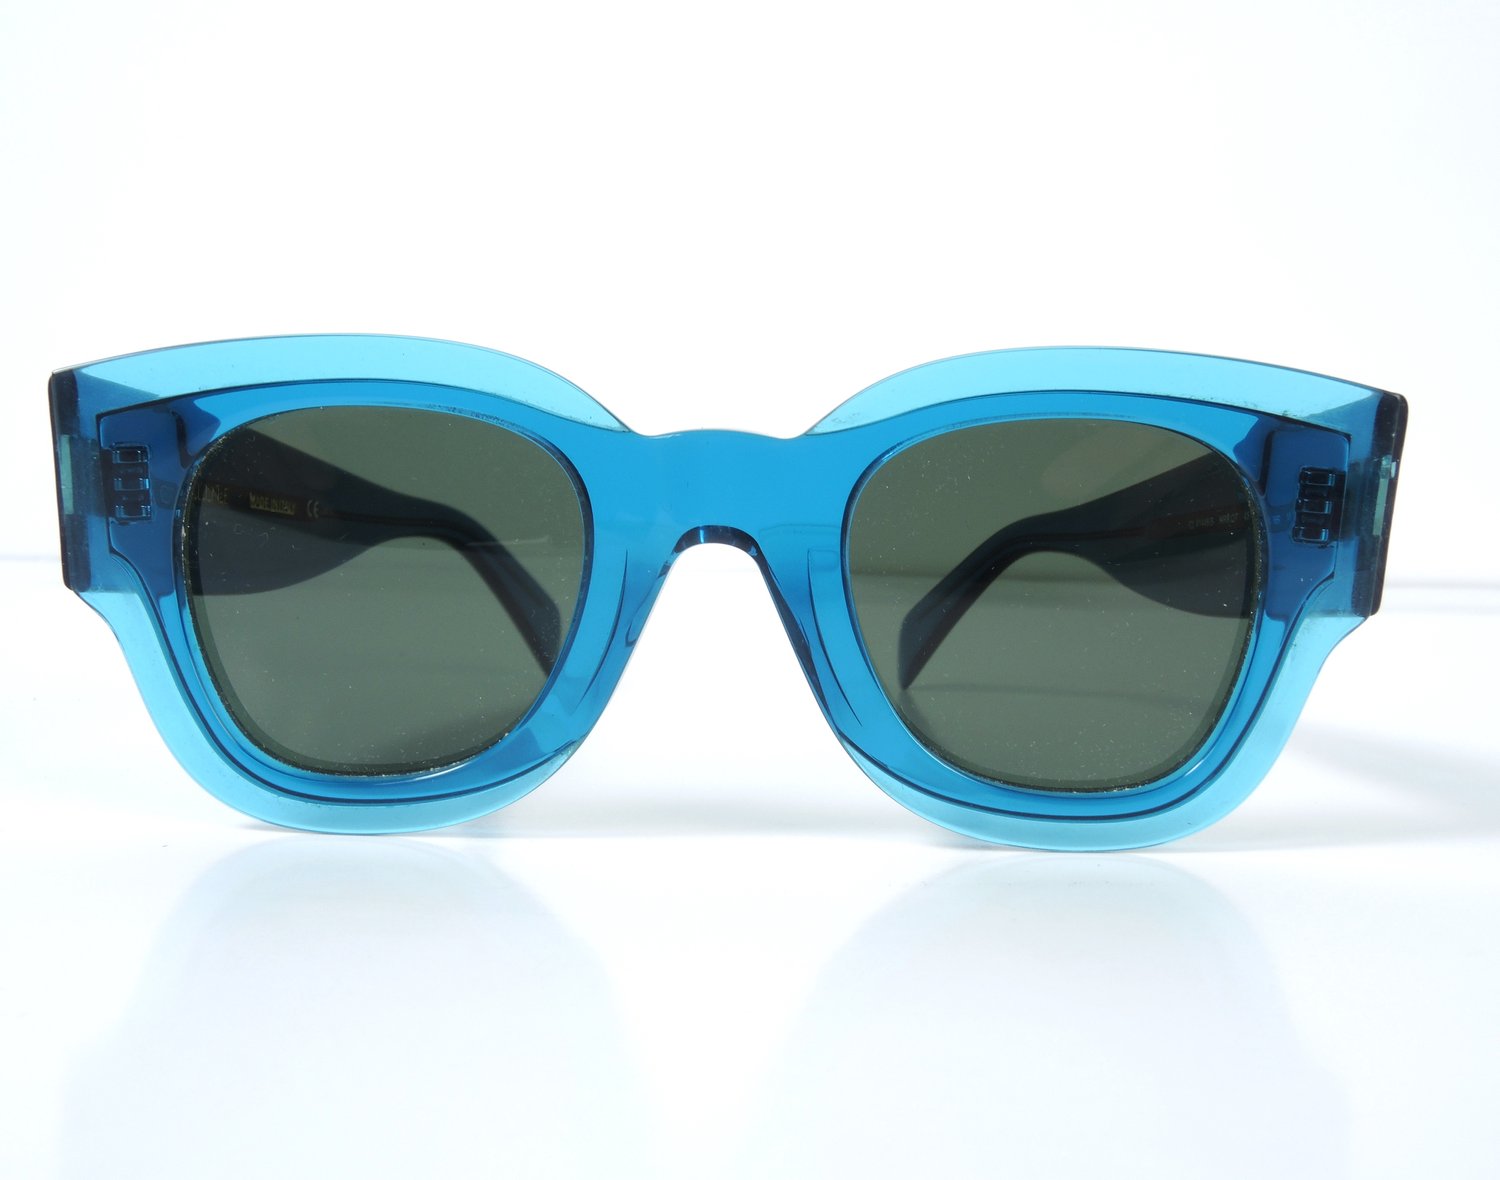 CELINE Translucent Blue Sunglasses — Seams to Fit Women's Consignment